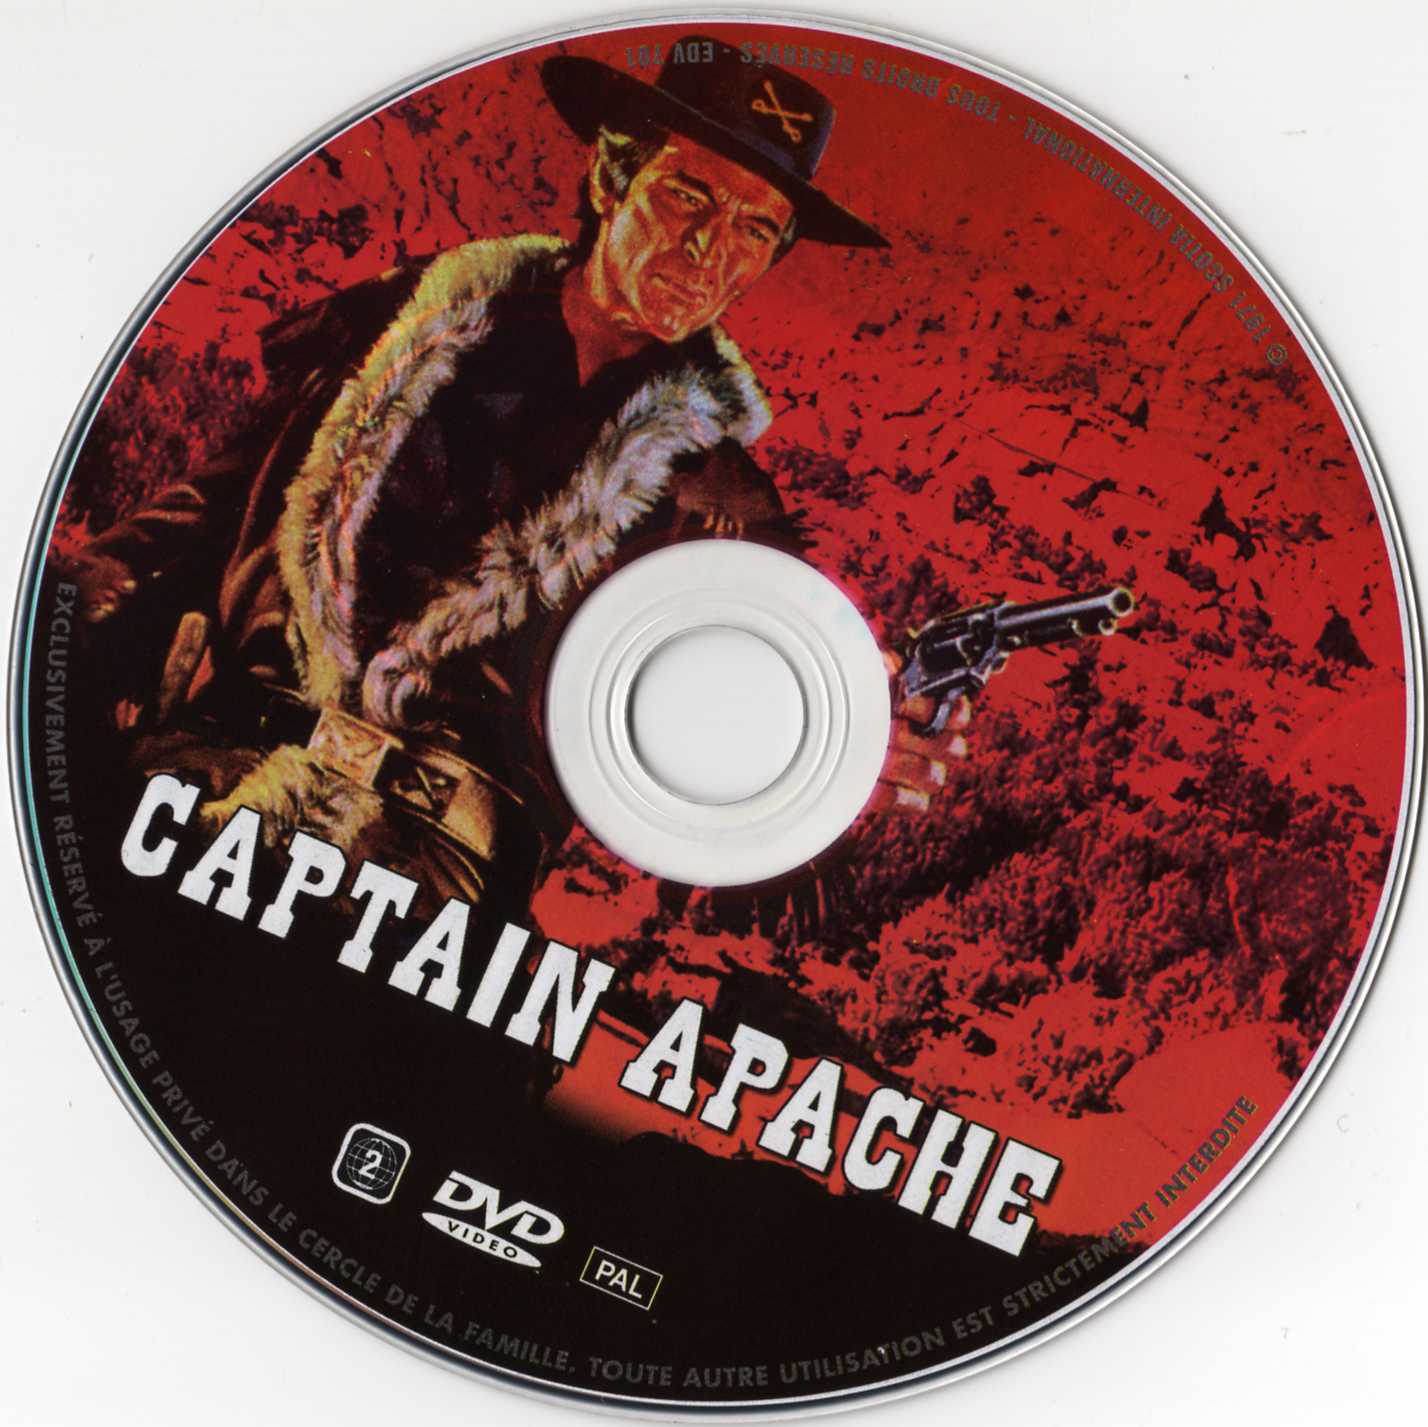 Captain apache v2